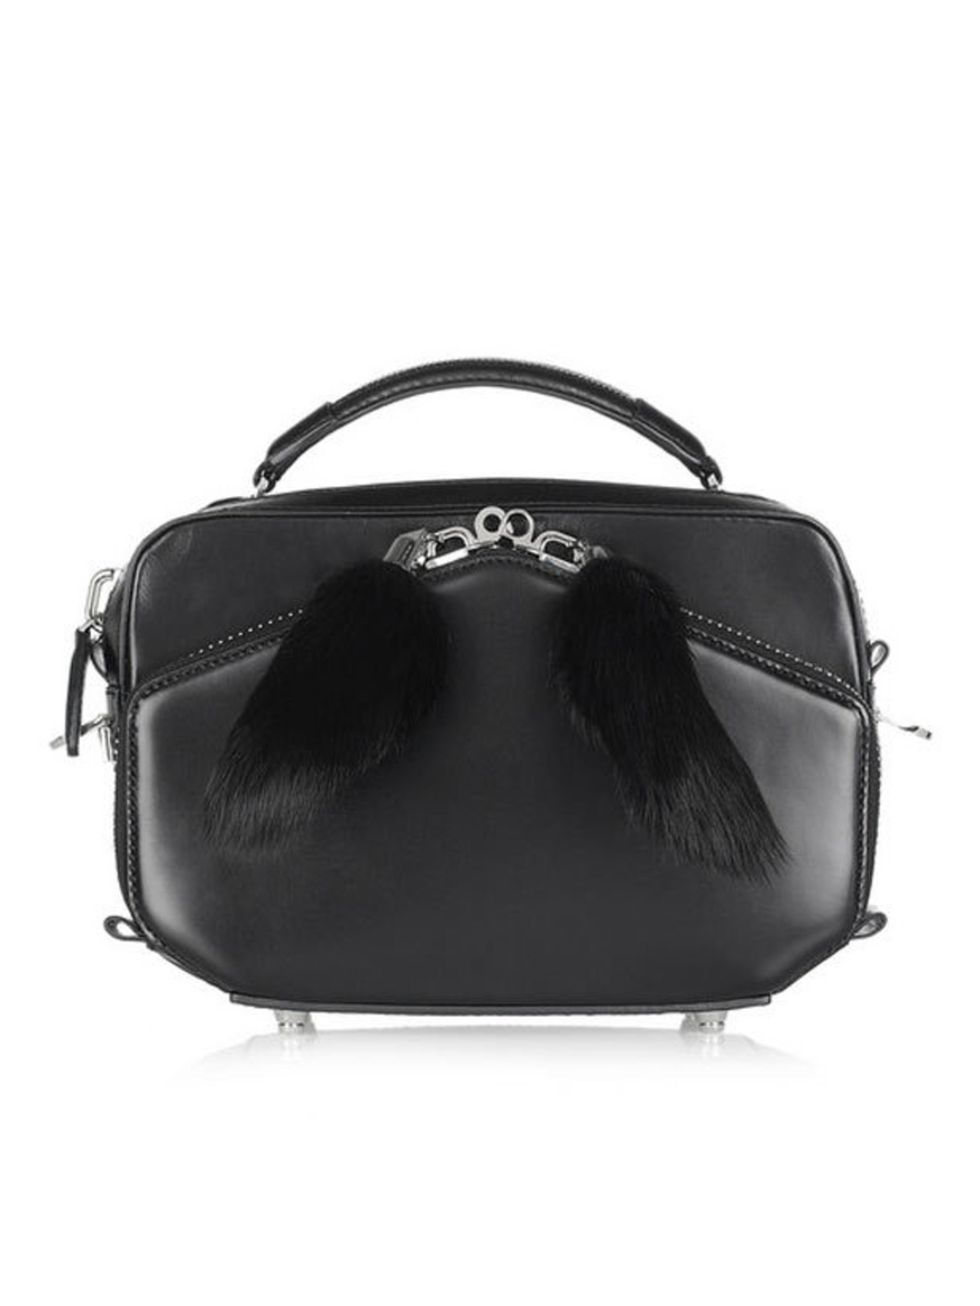 <p>Alexander Wang 'Rafael' leather box bag, £610, at Net-a-Porter</p>